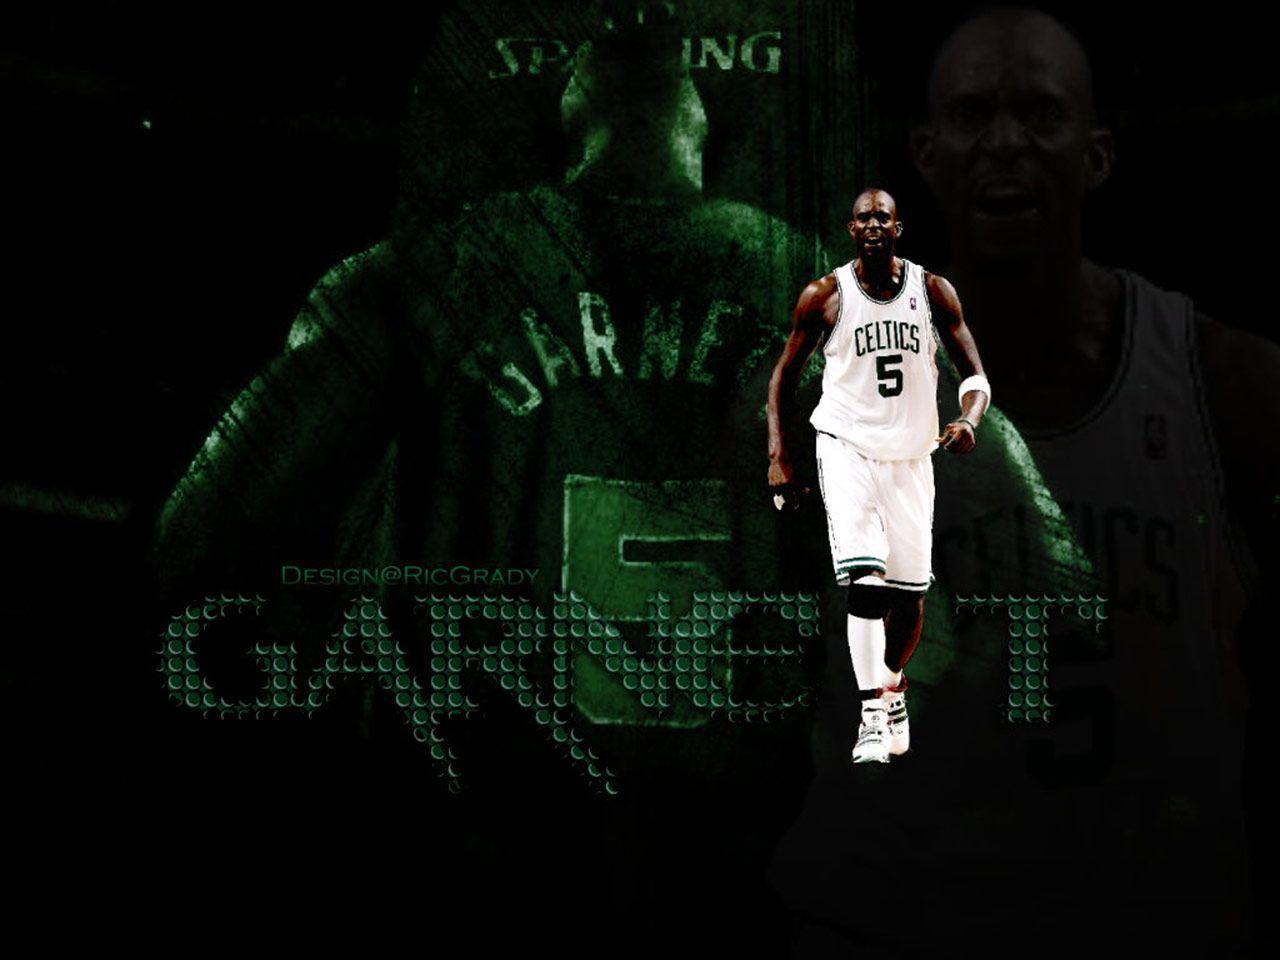 KG Celtics 2010 Wallpaper. Basketball Wallpaper at